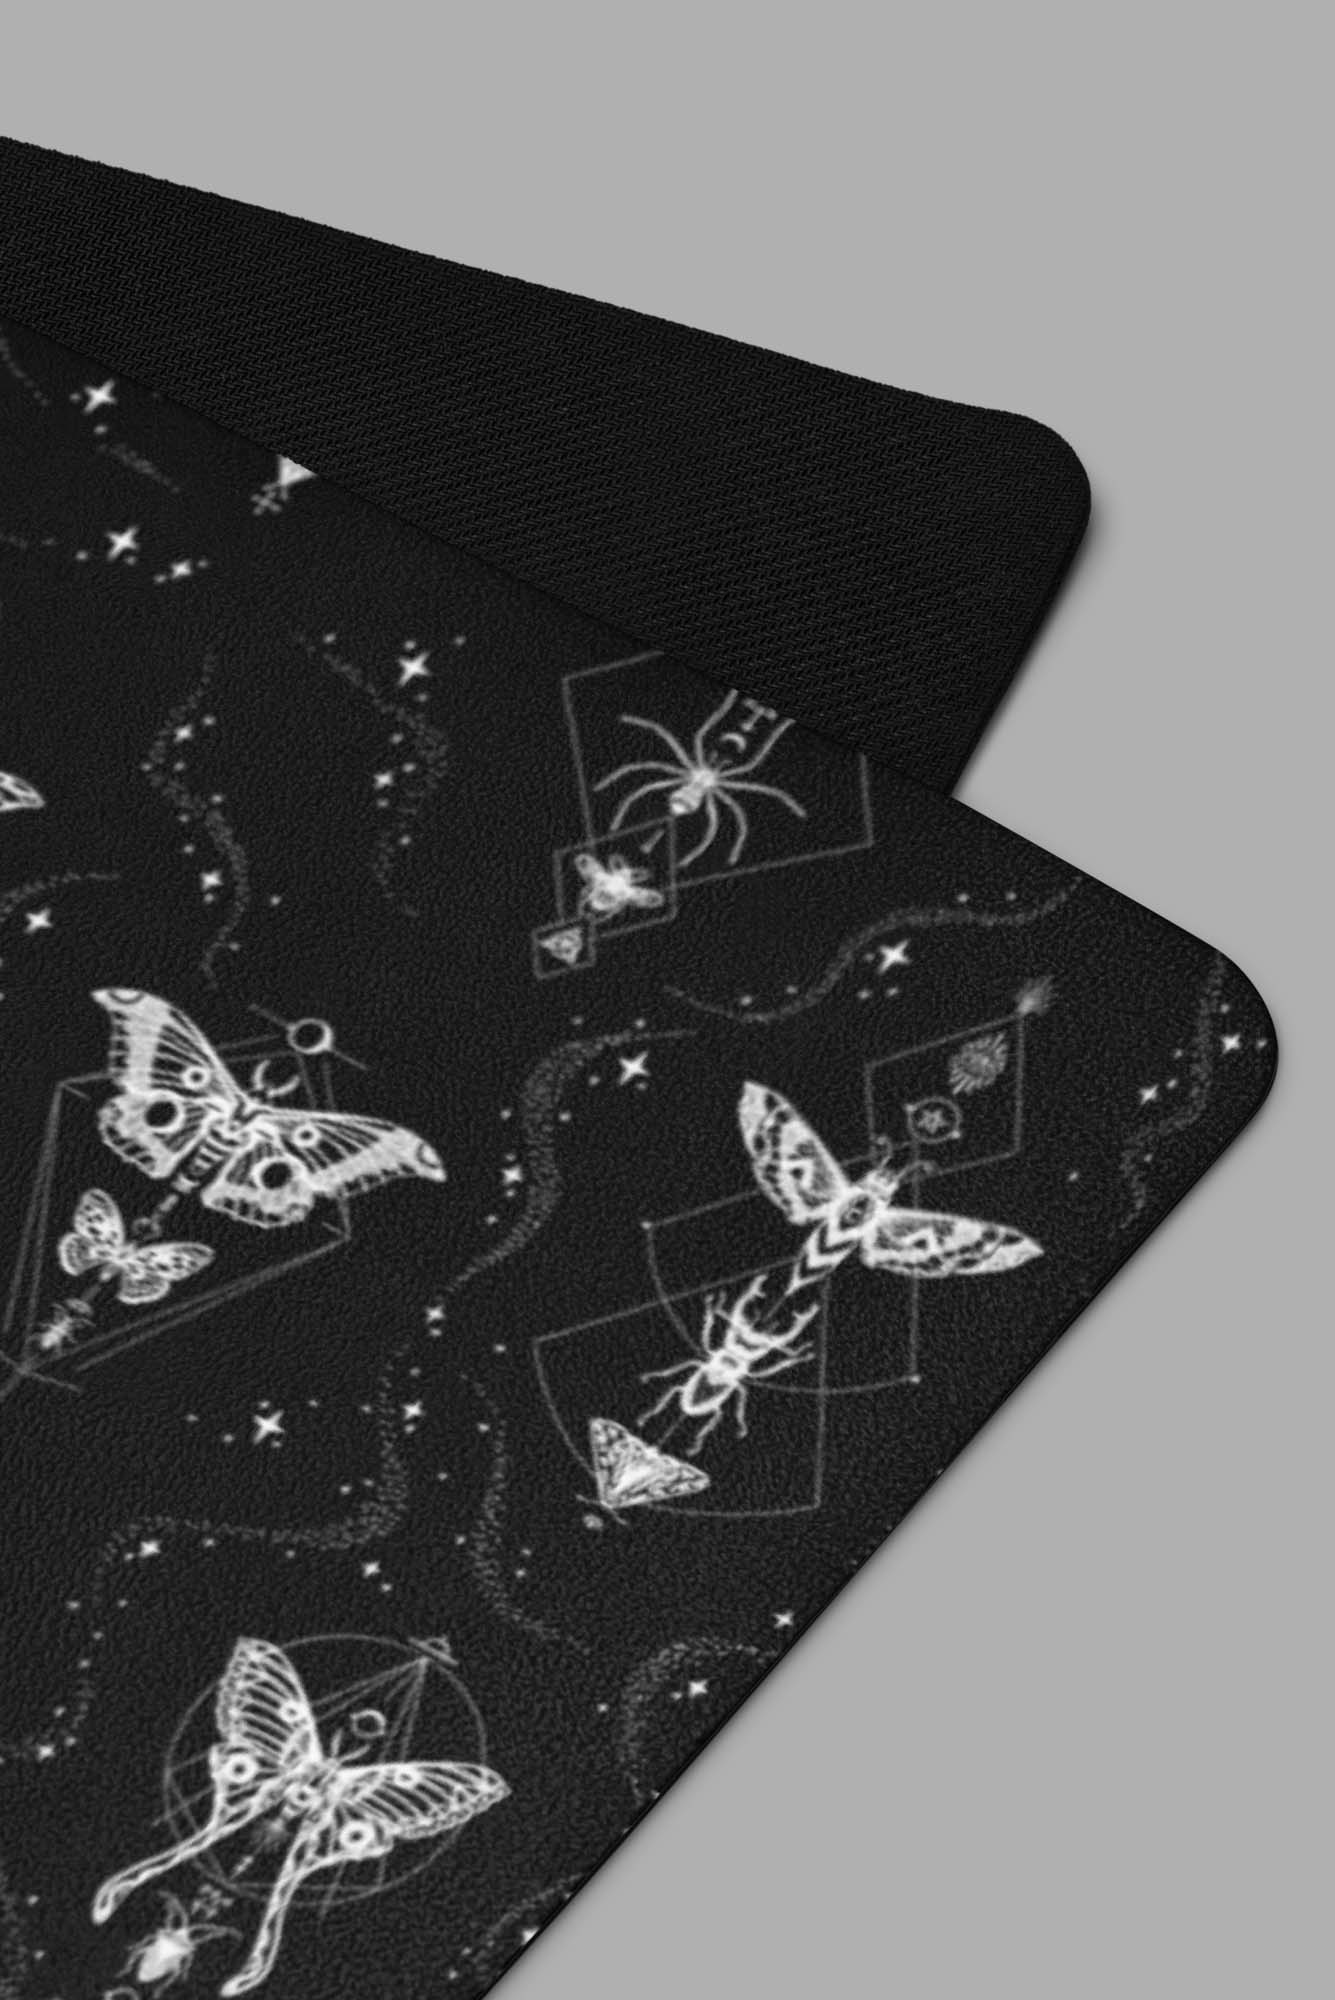 cosmic drifters entomon print yoga mat close